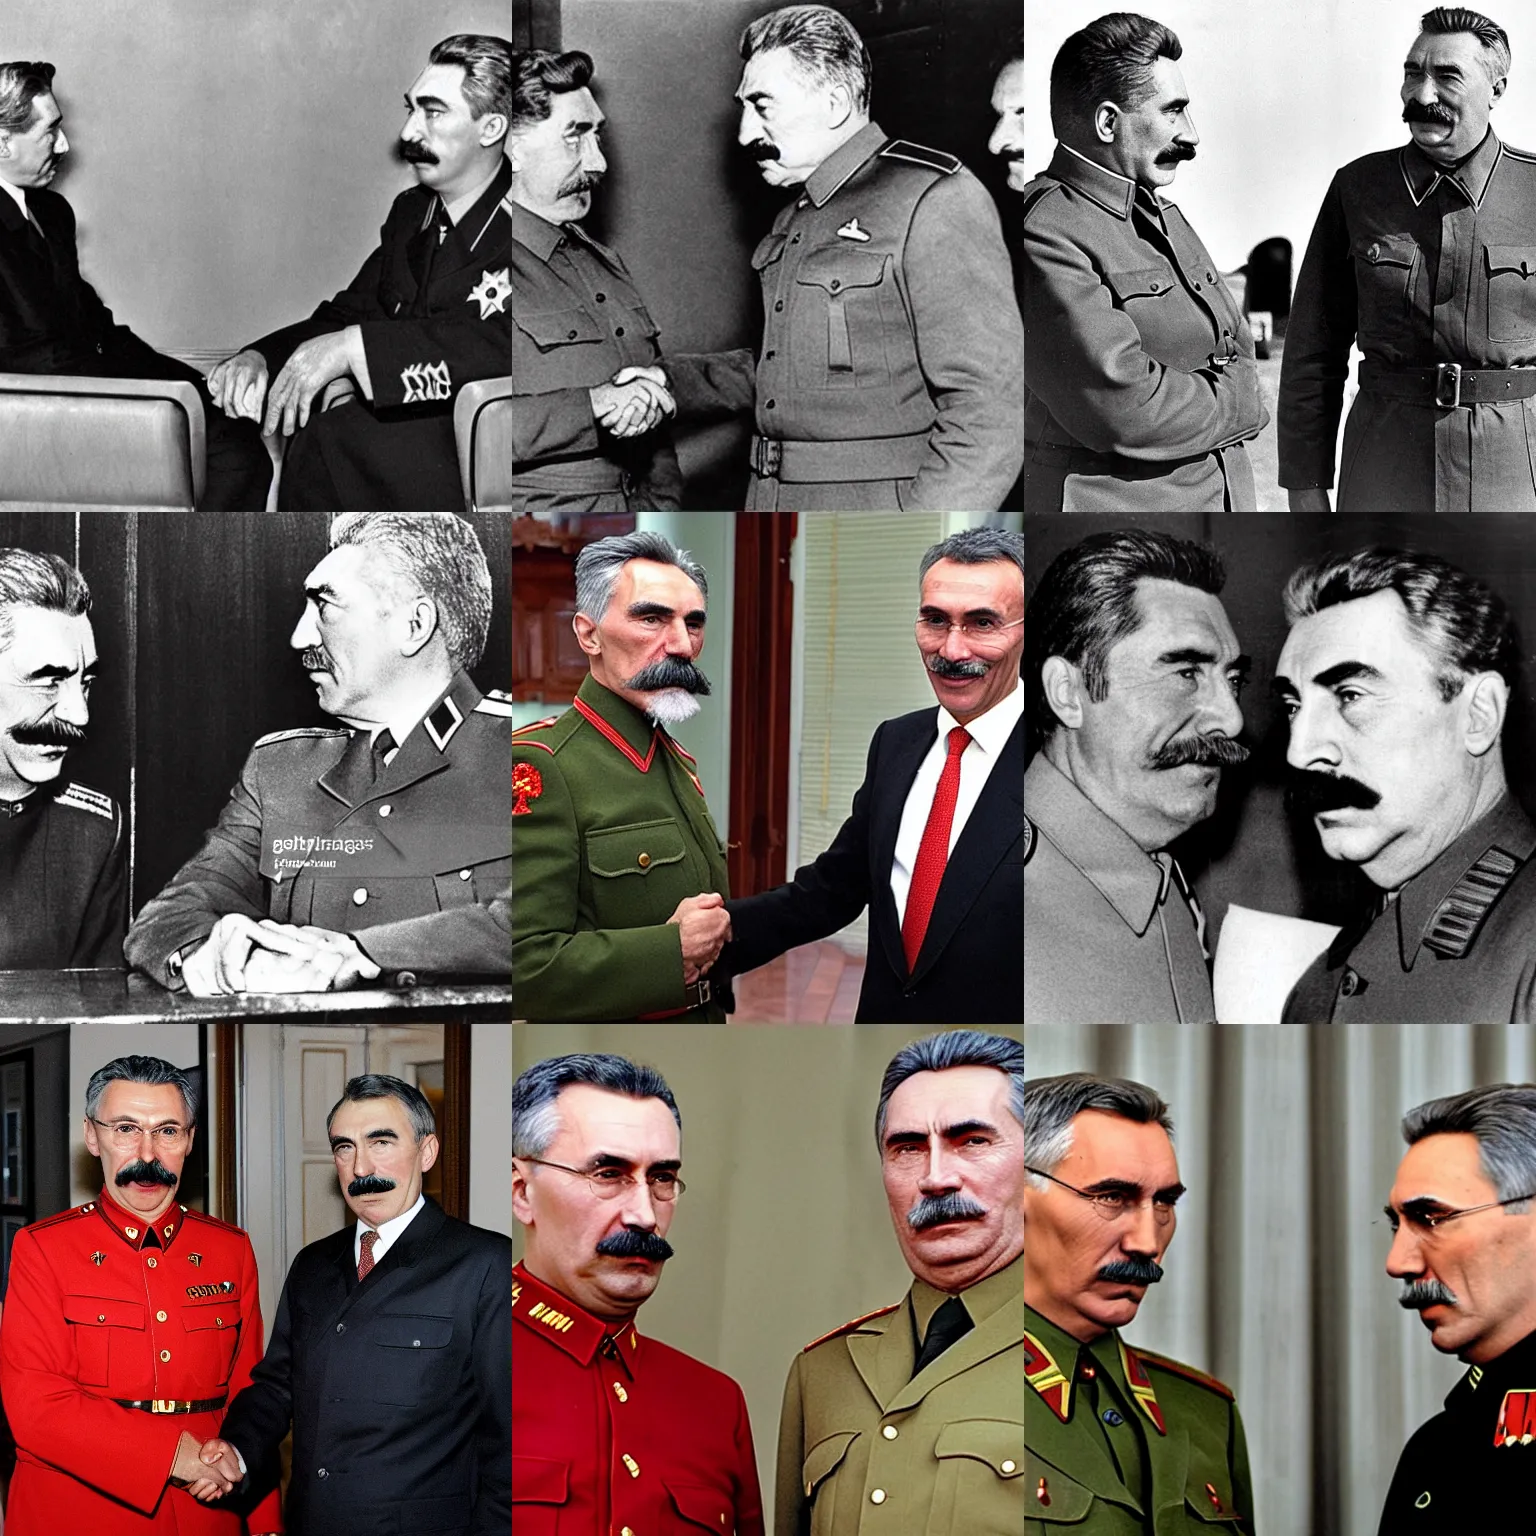 Prompt: Joseph Stalin meets Jens Stoltenberg top diplomat meeting